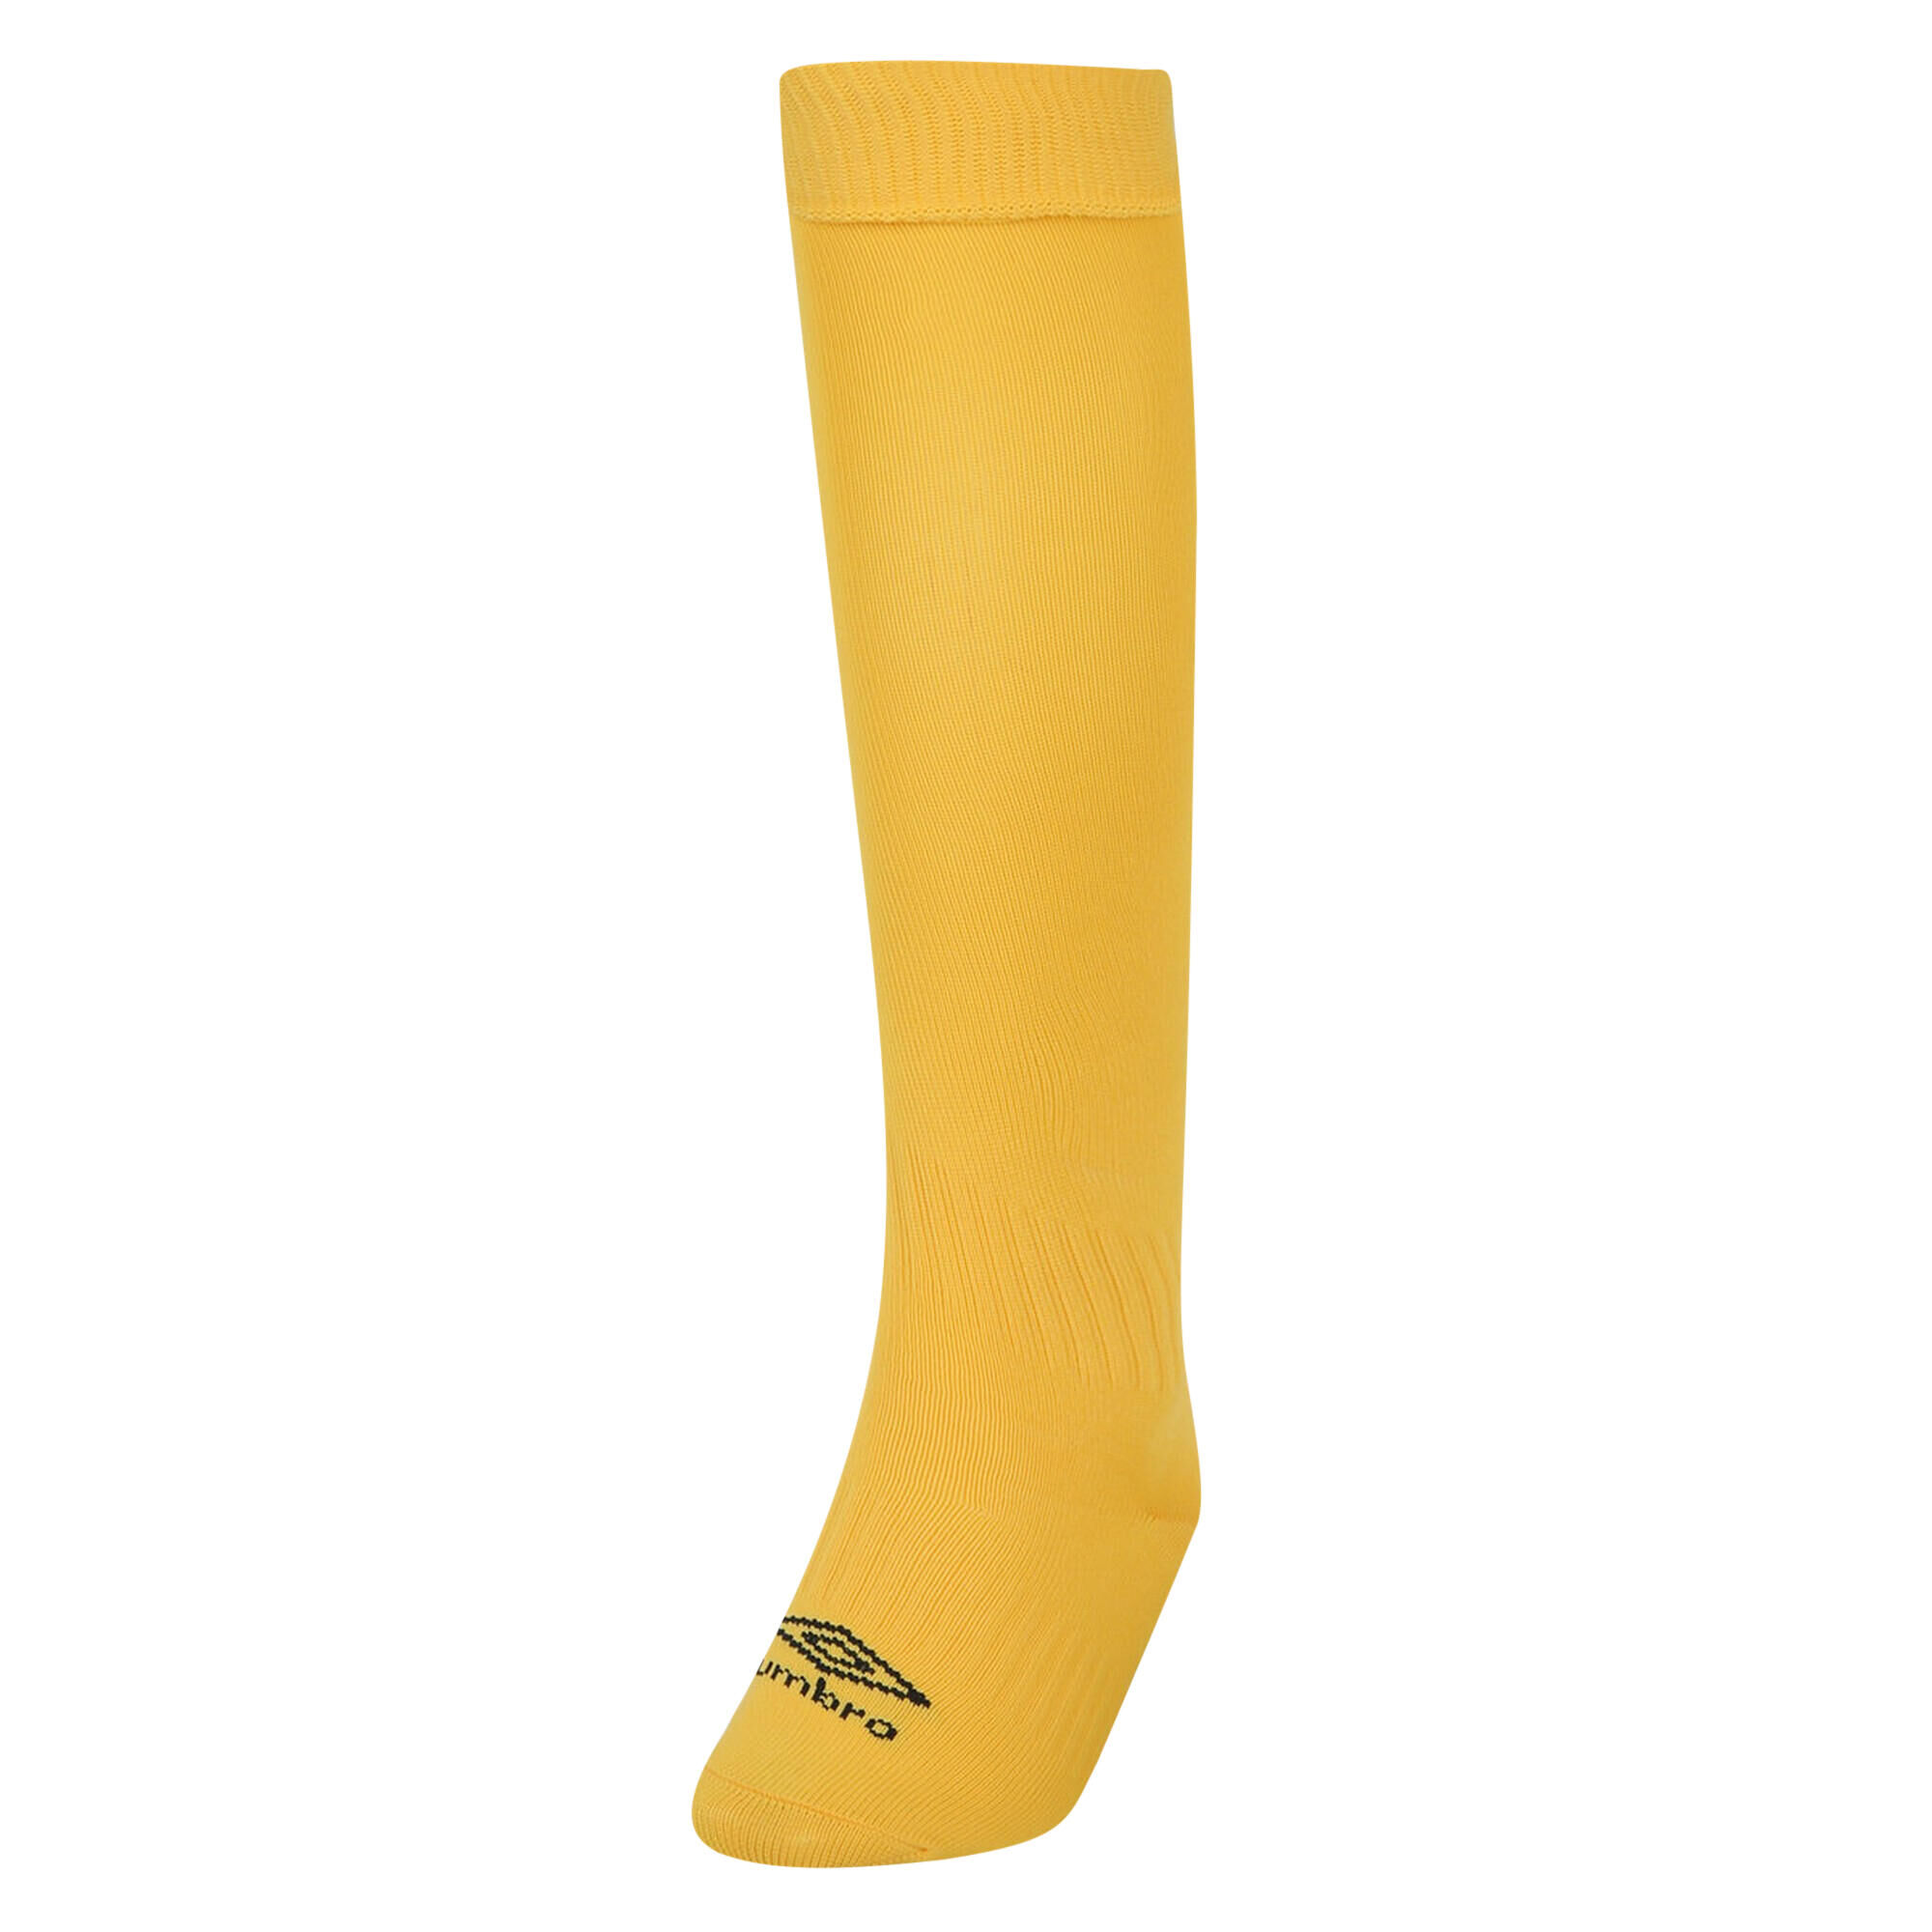 UMBRO Childrens/Kids Primo Football Socks (Yellow/Black)